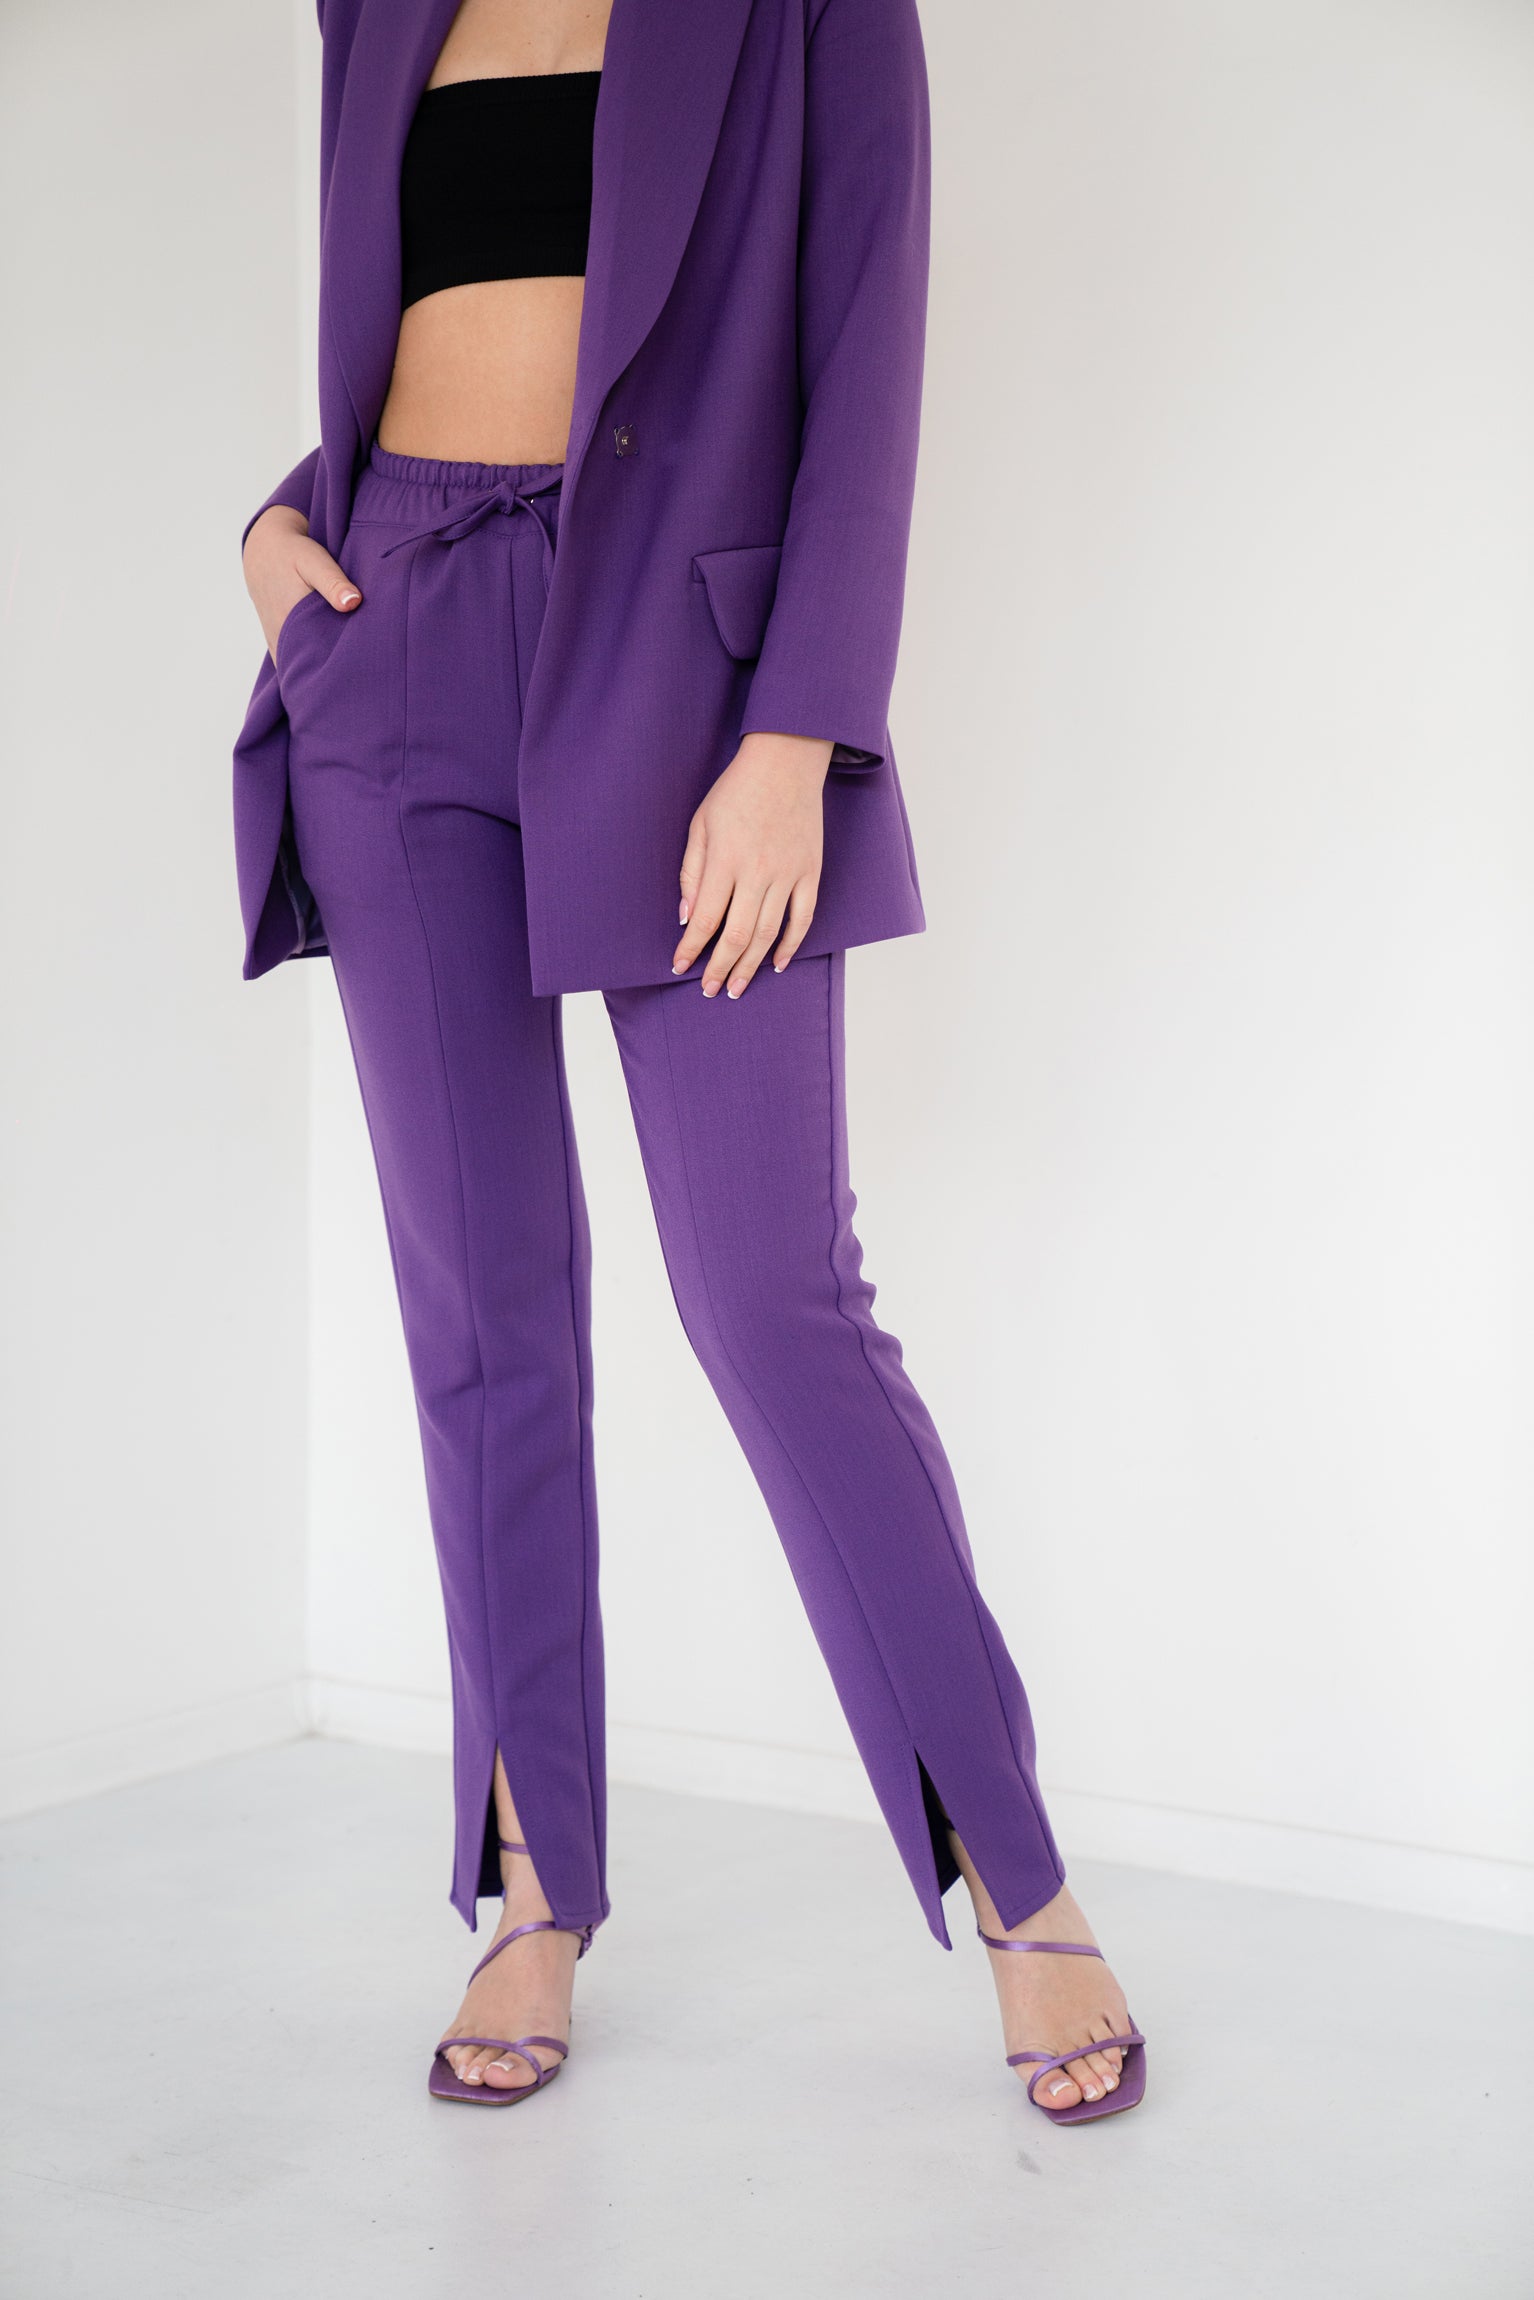 Purple STATEMENT pants